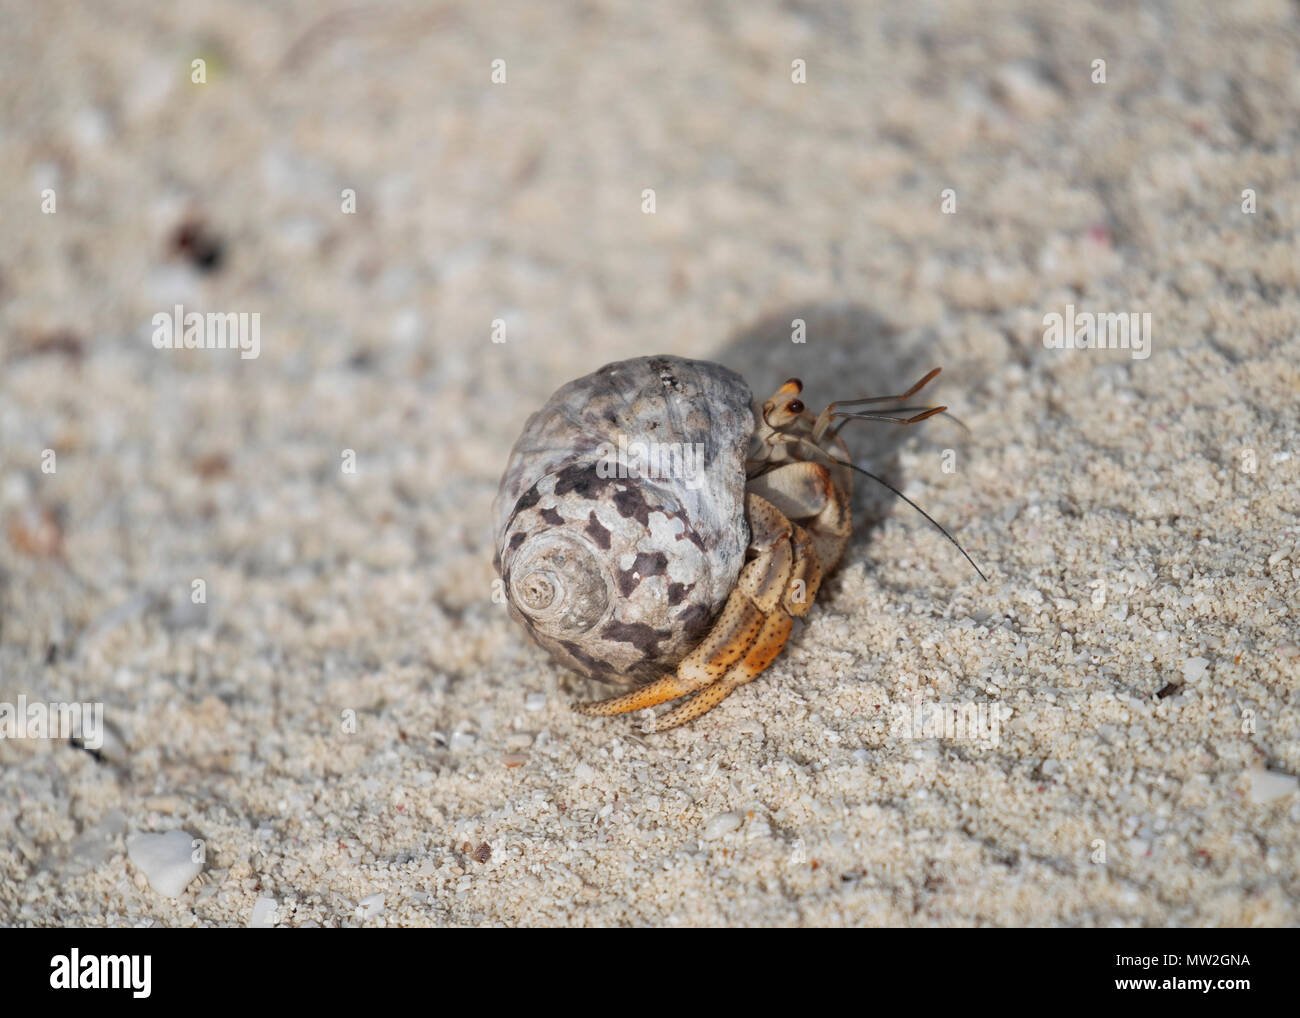 Caribbean hermit crab on the beach in Cuba Stock Photo